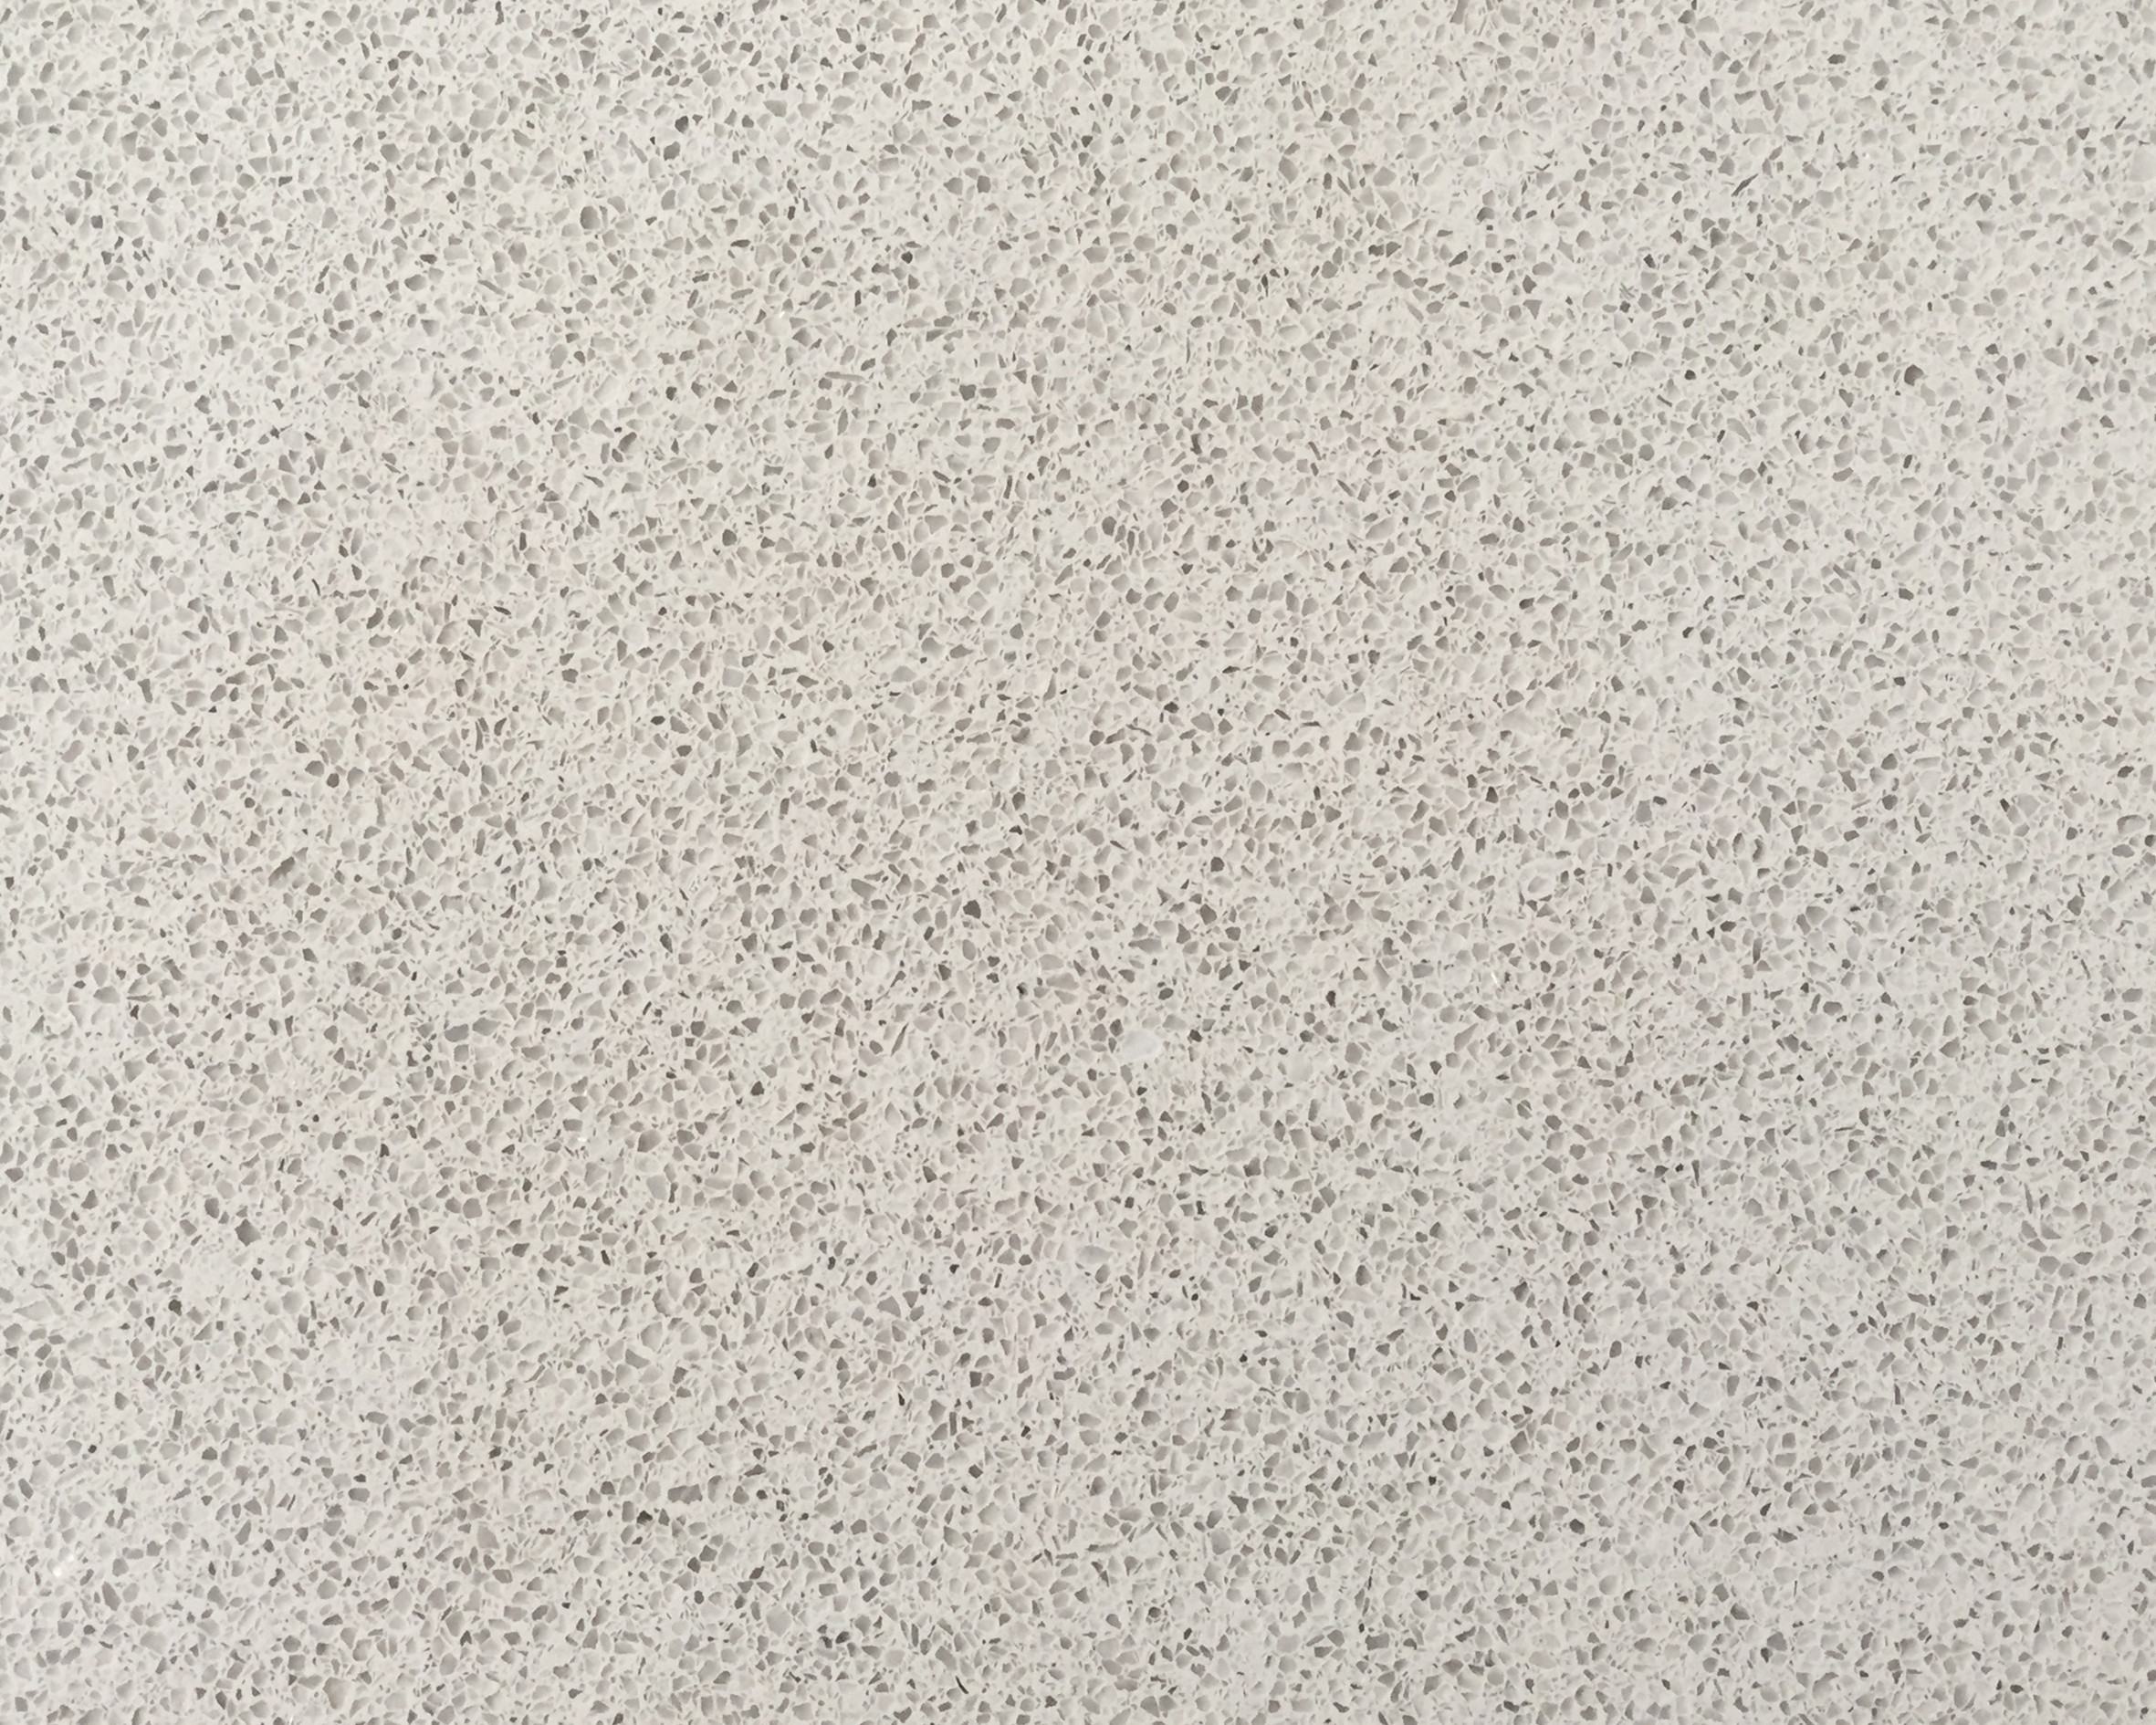 DL-12301 Classical Sand Grey Quartz Slab Counter Top 